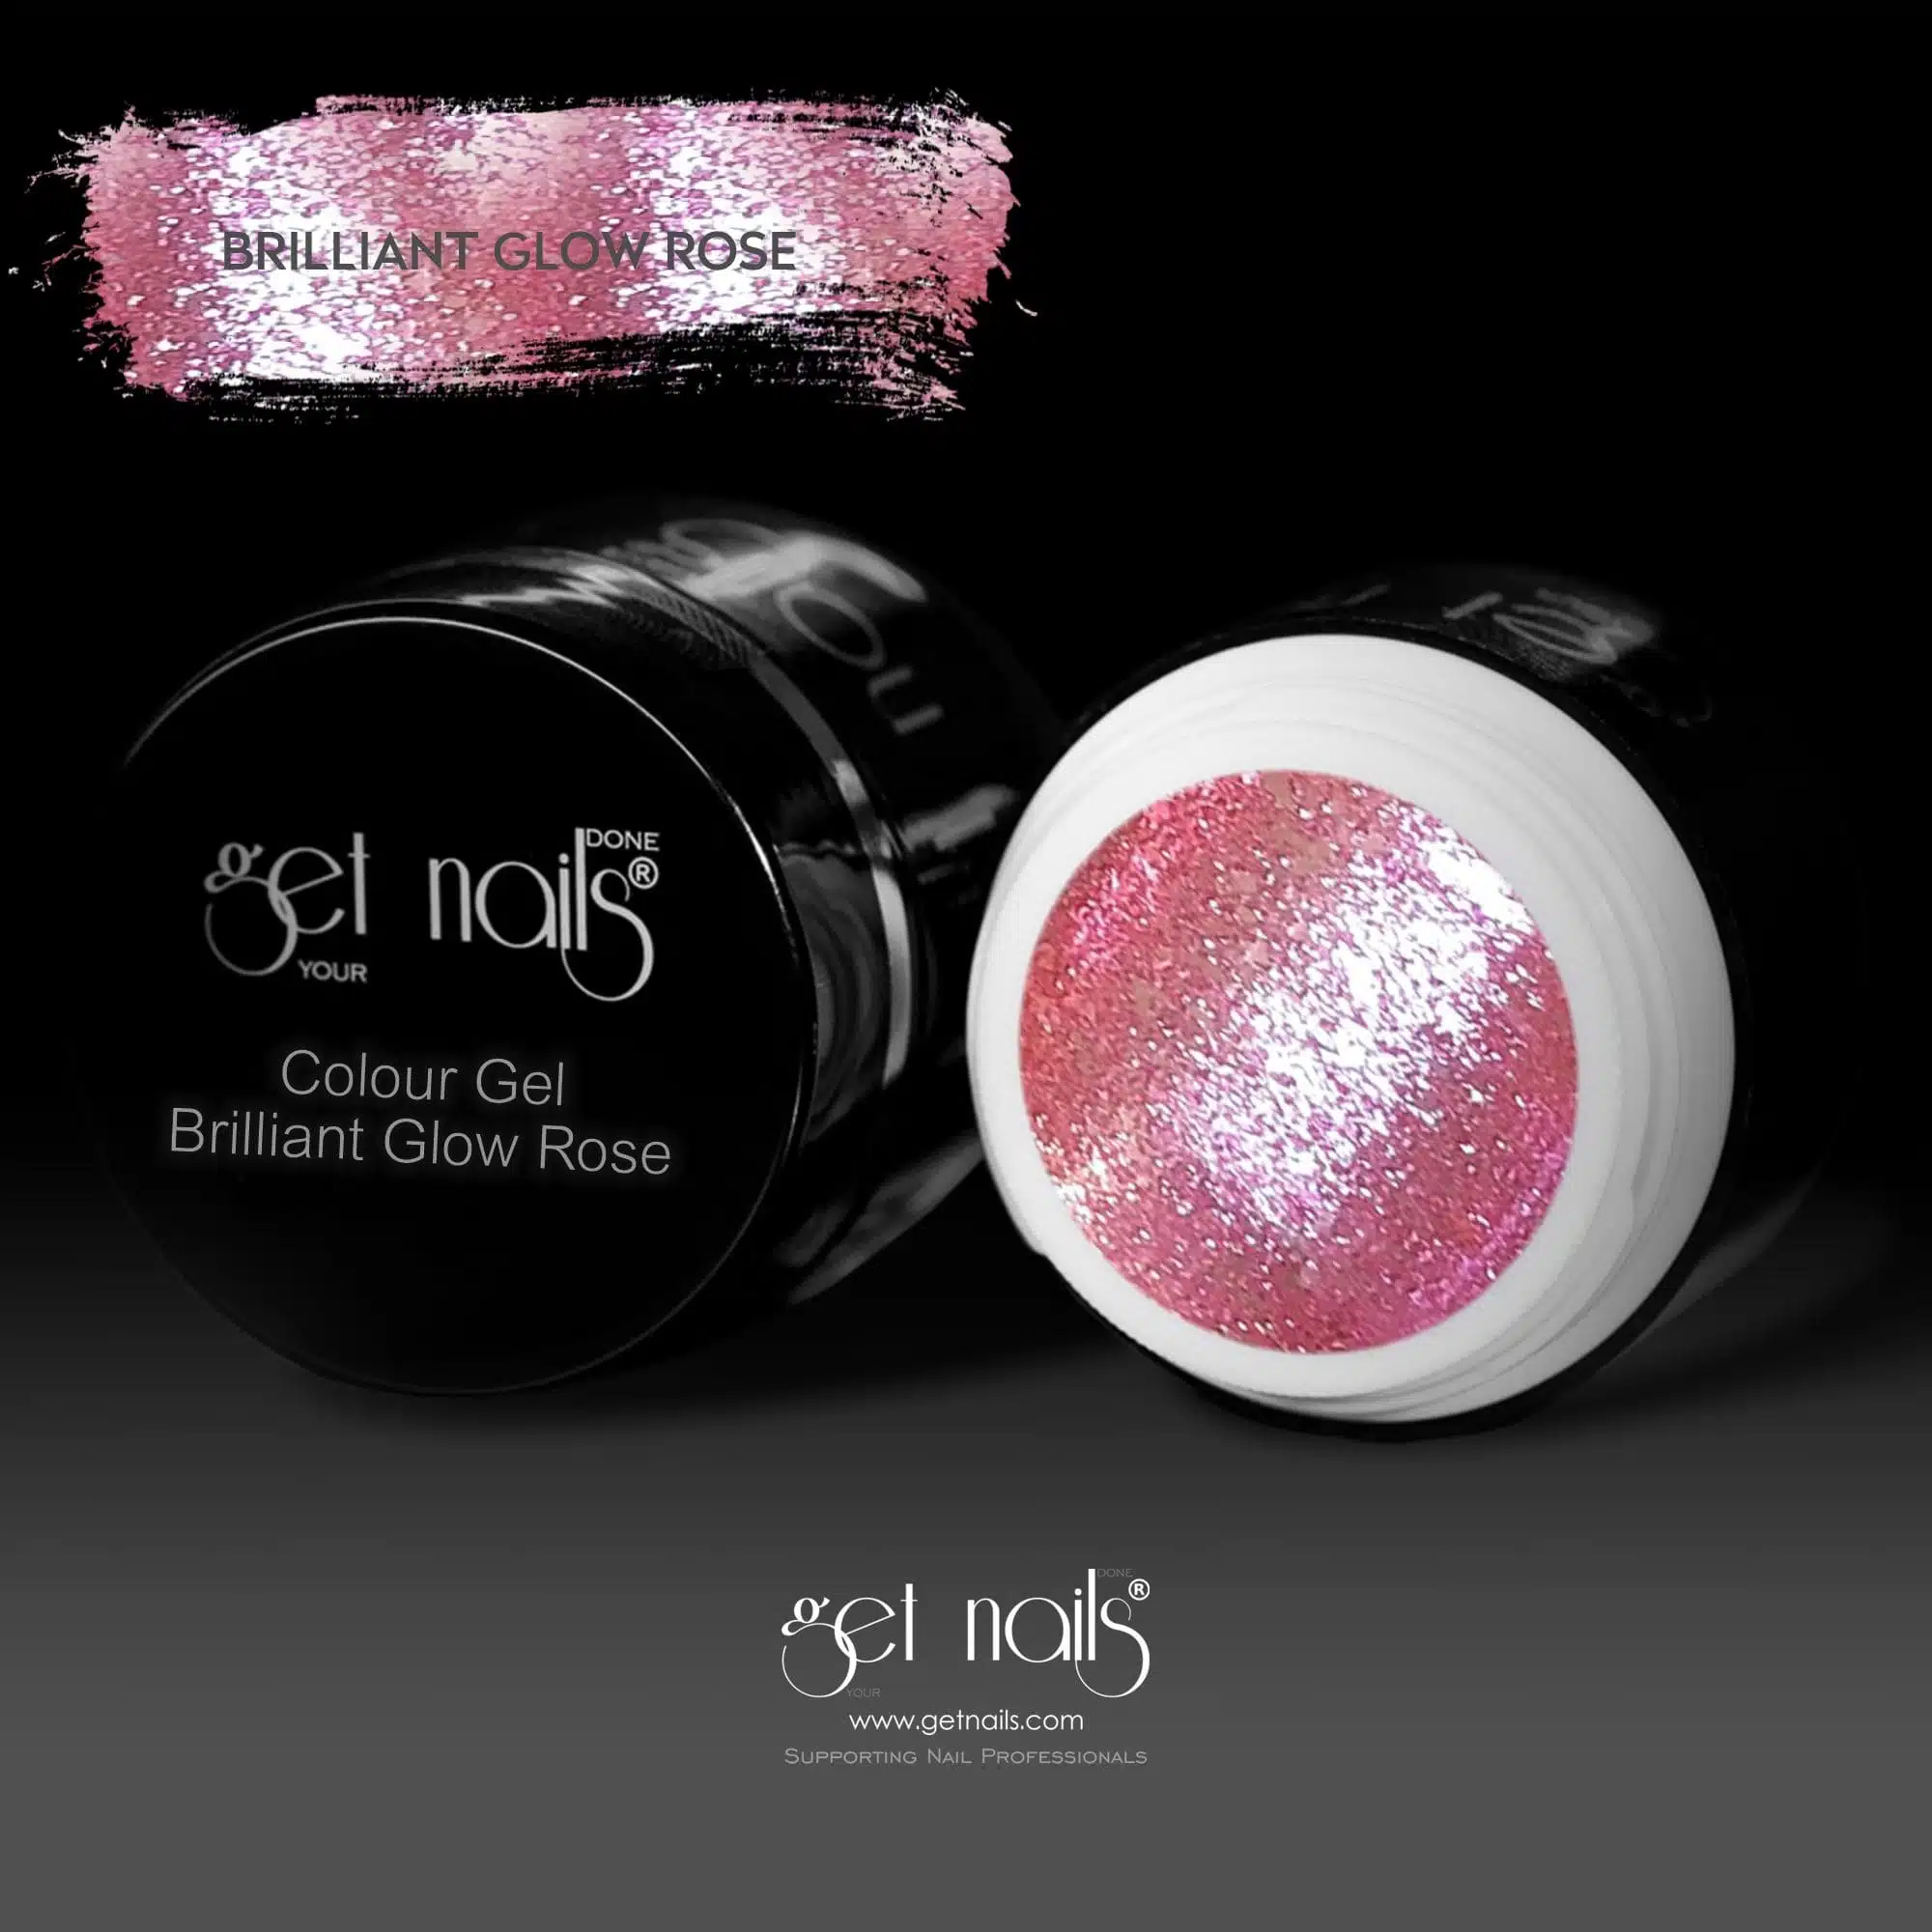 Get Nails Austria - Цветной гель Brilliant Glow Rose 5g